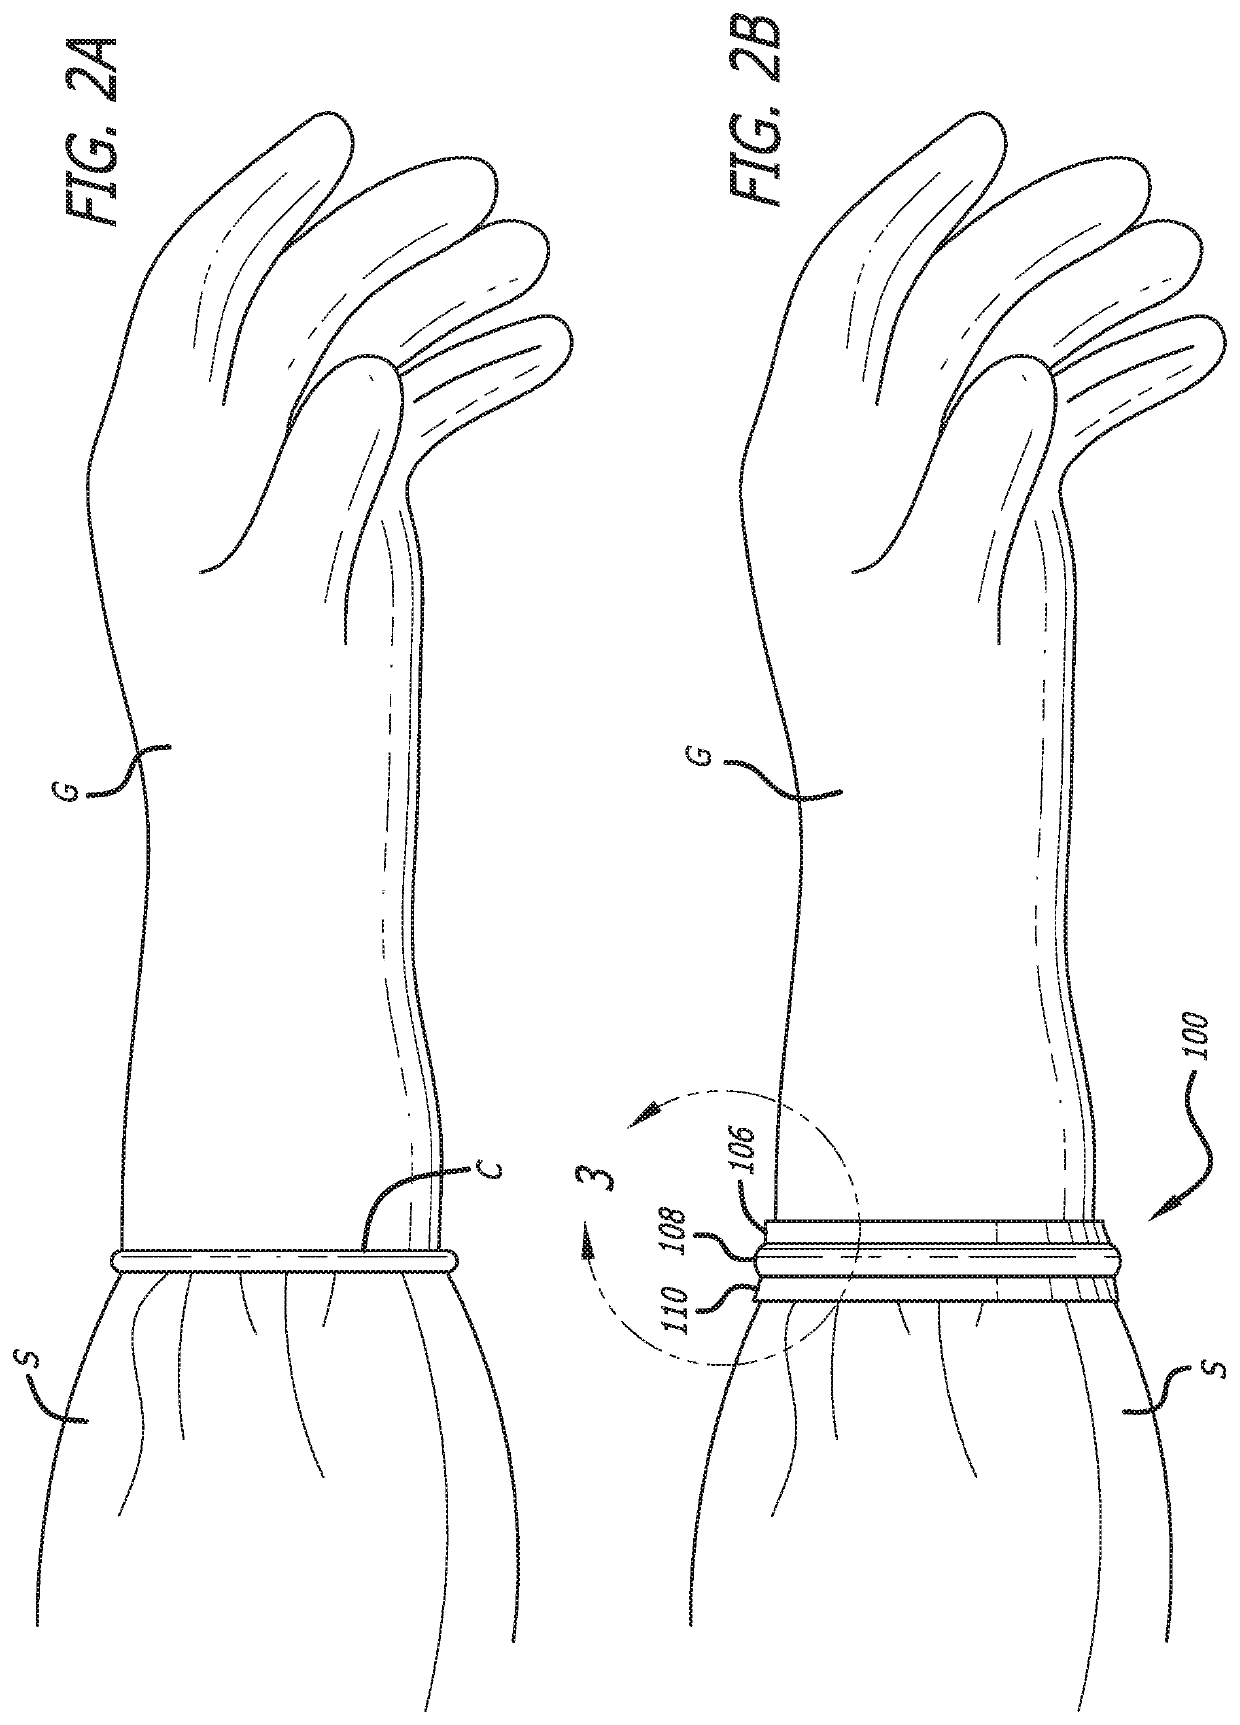 Medical glove Anti-slip and fluid guard band